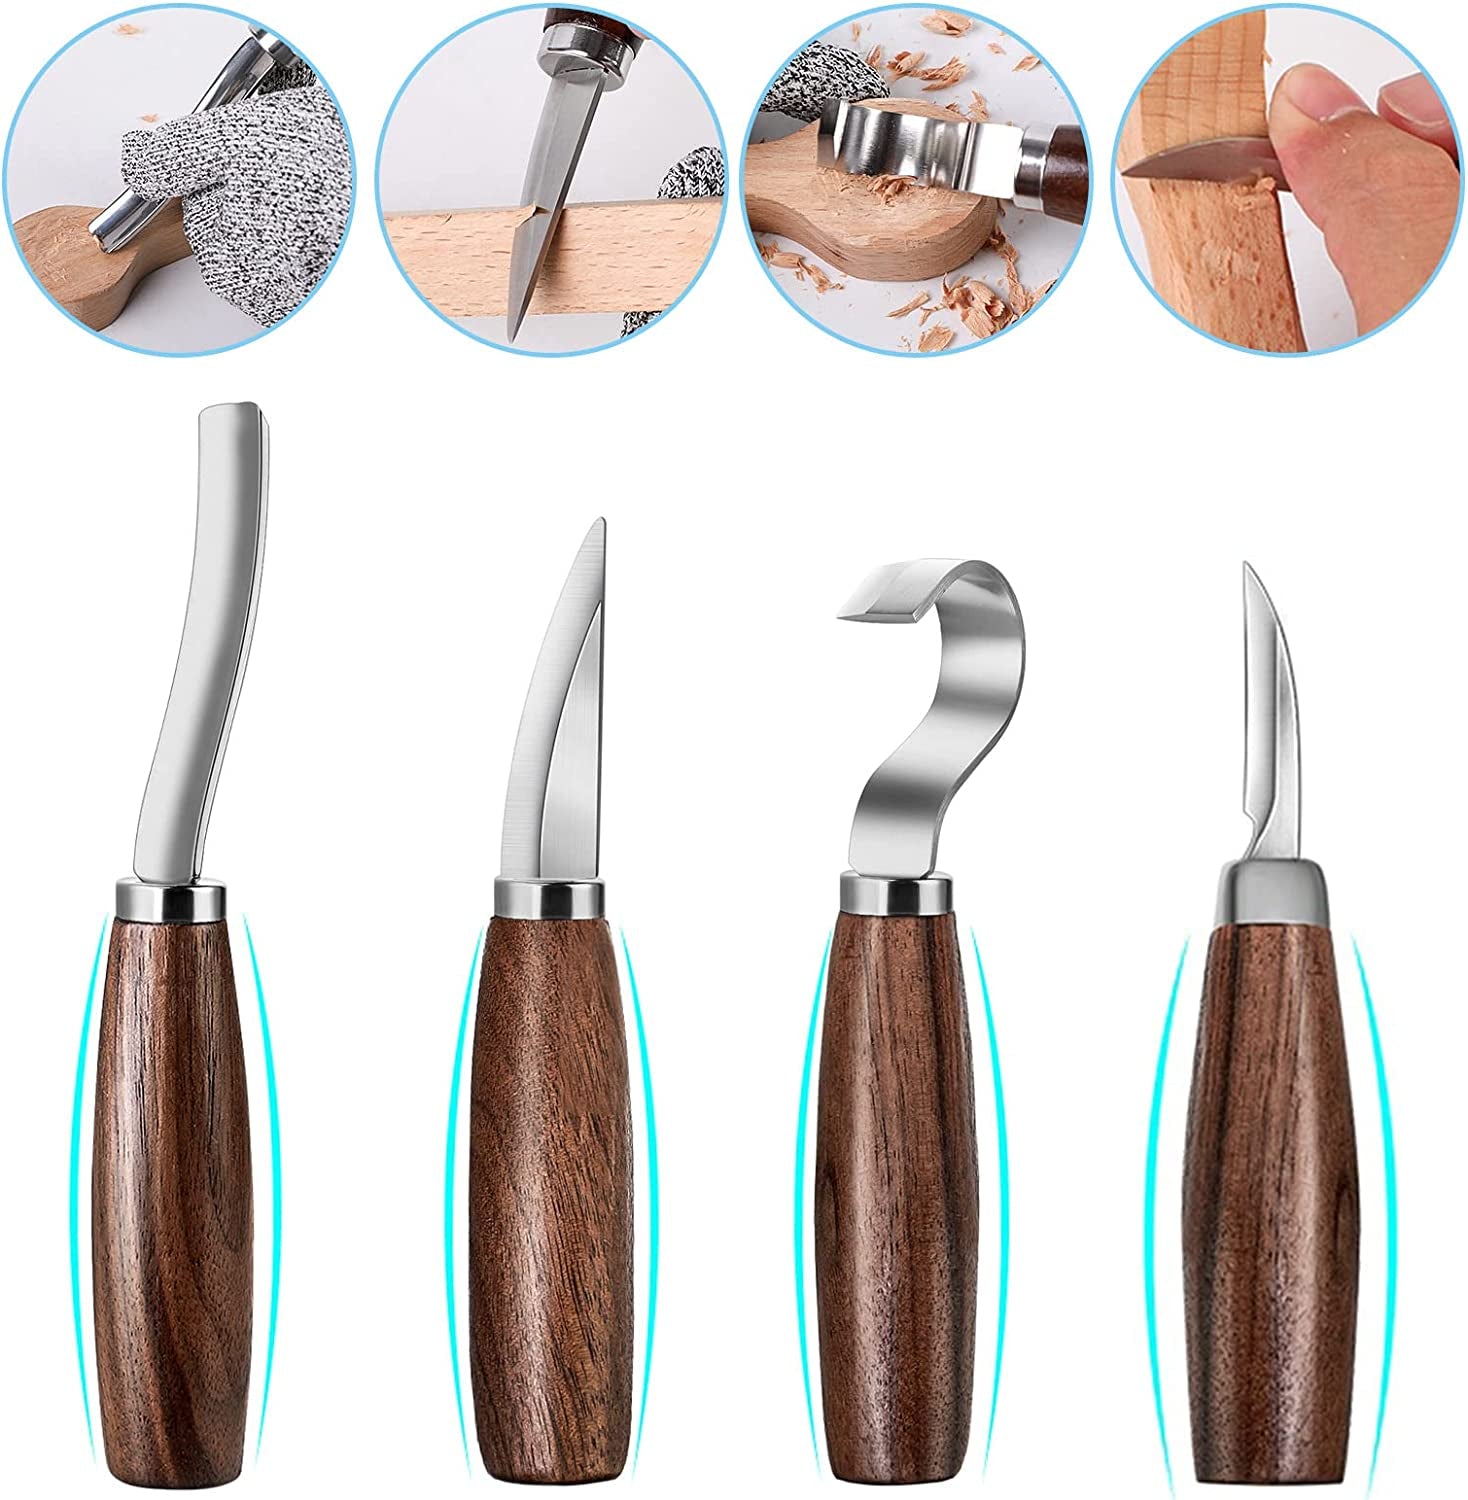 DIY Hook Knife Wood Carving Tools Ergonomic Woodworking Spoon Durable  Crooked Beginners Sculptural Stainless Steel Professional